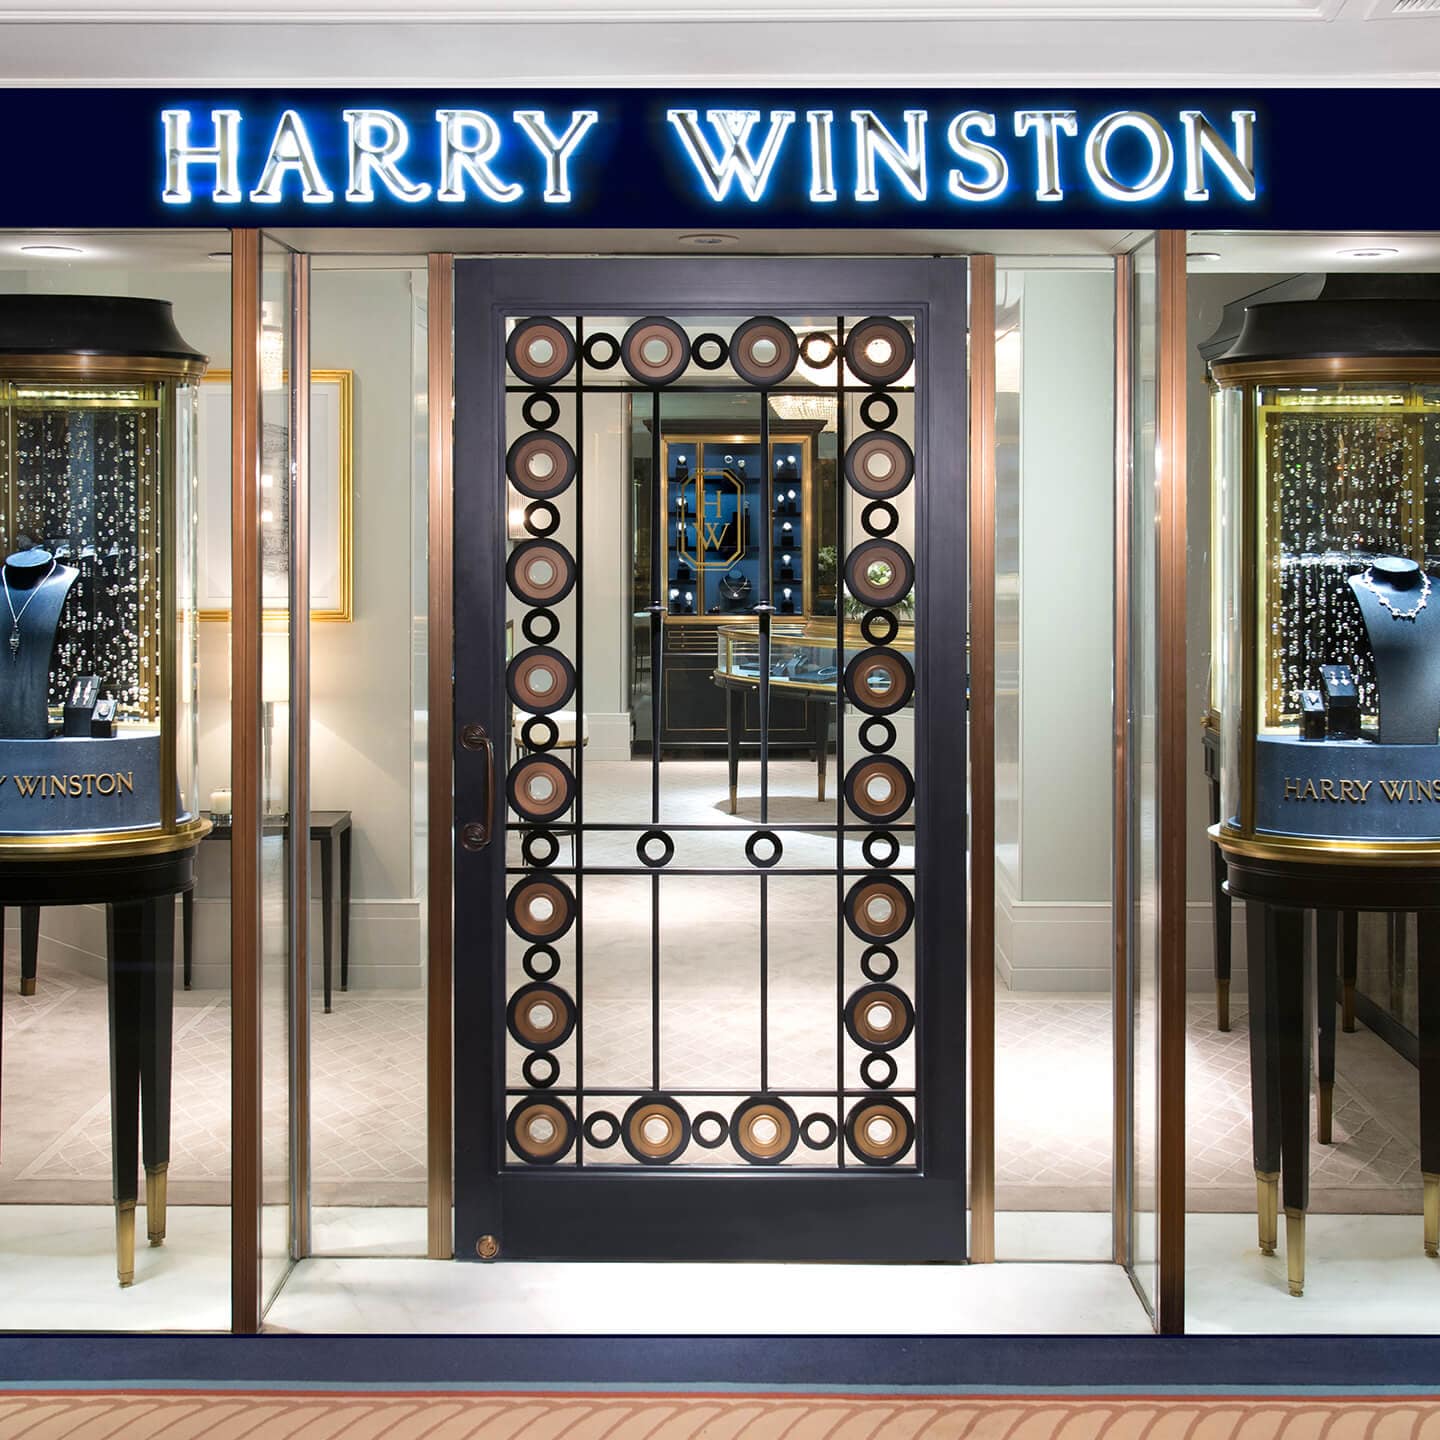 Façade of the Harry Winston Hong Kong Peninsula Salon